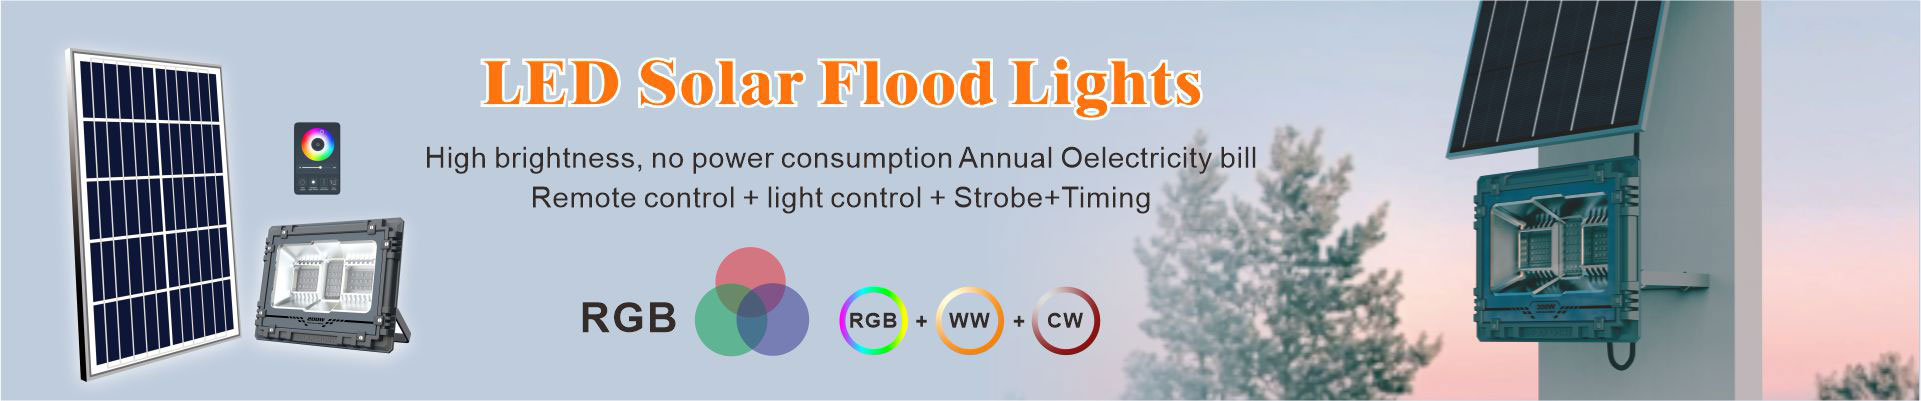 LED Solar Flood Lights